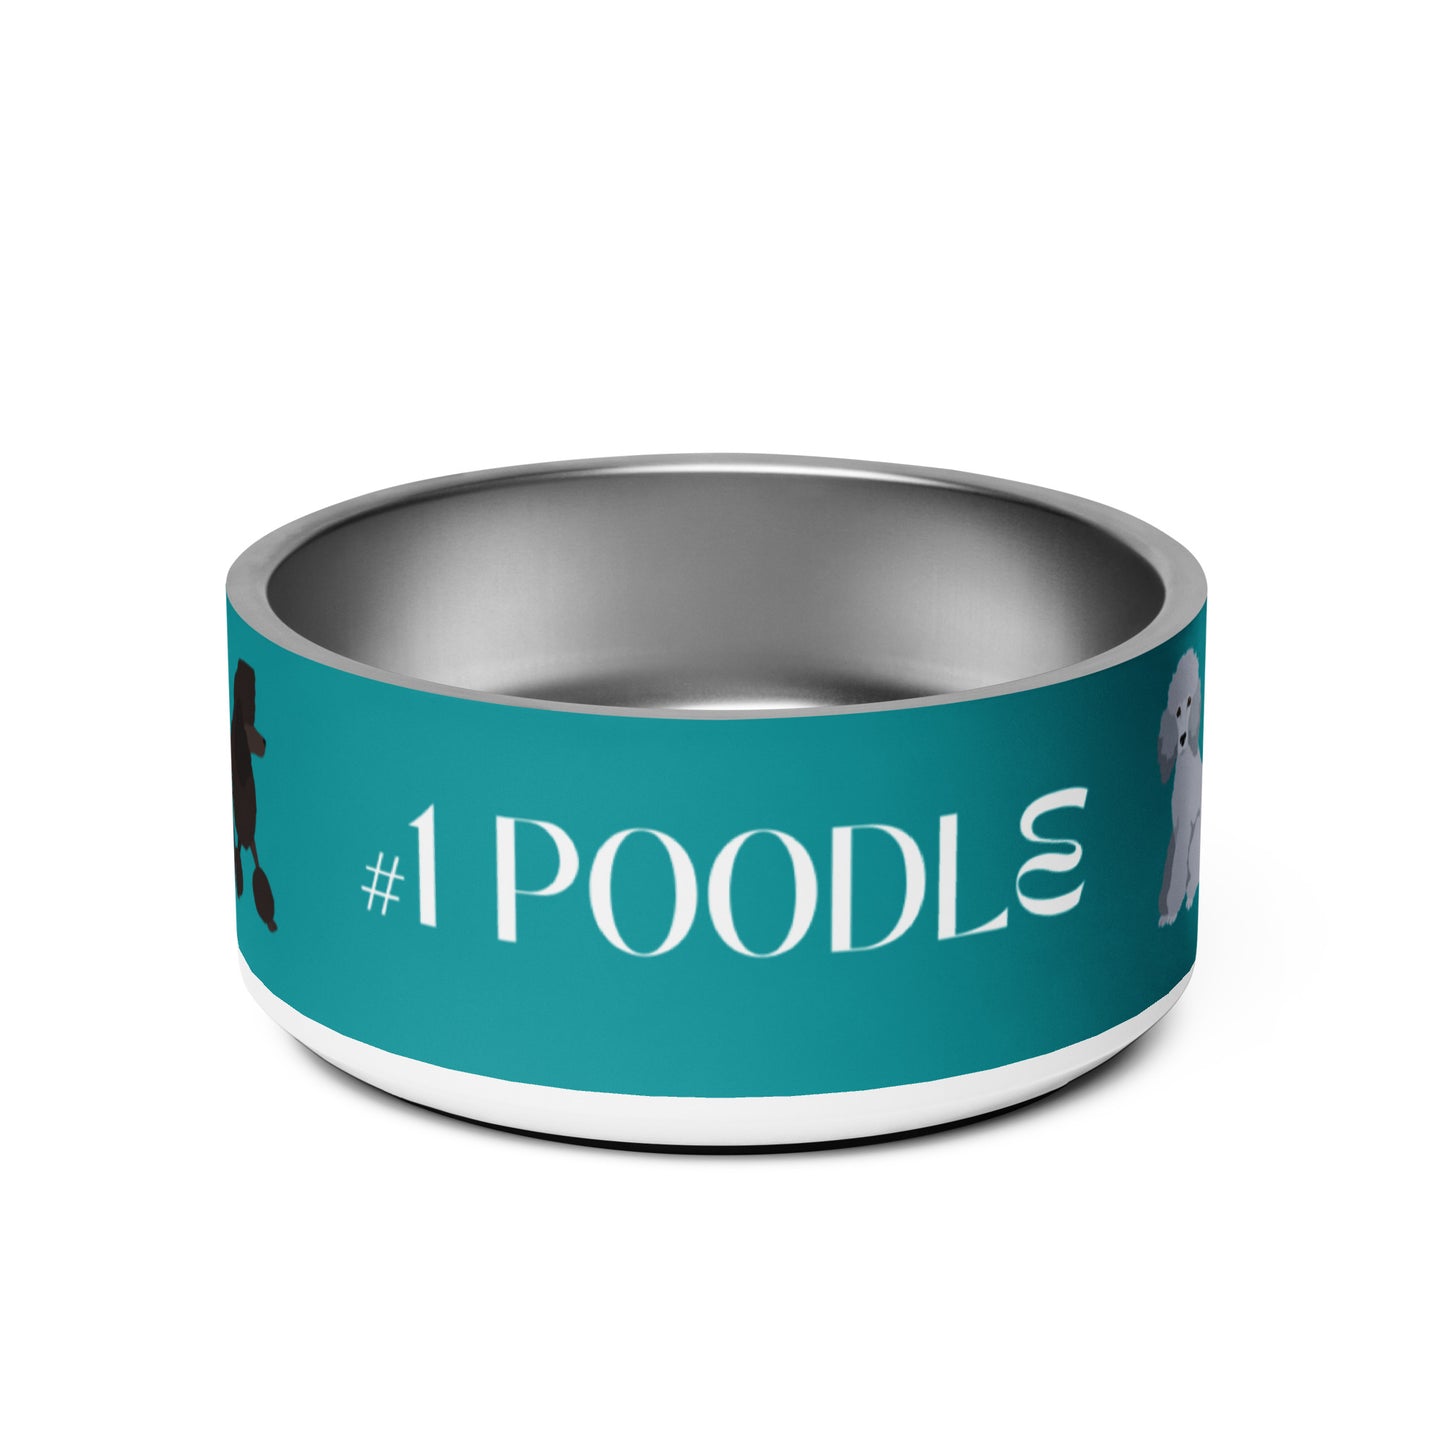 "Number 1 Poodle" Pet bowl